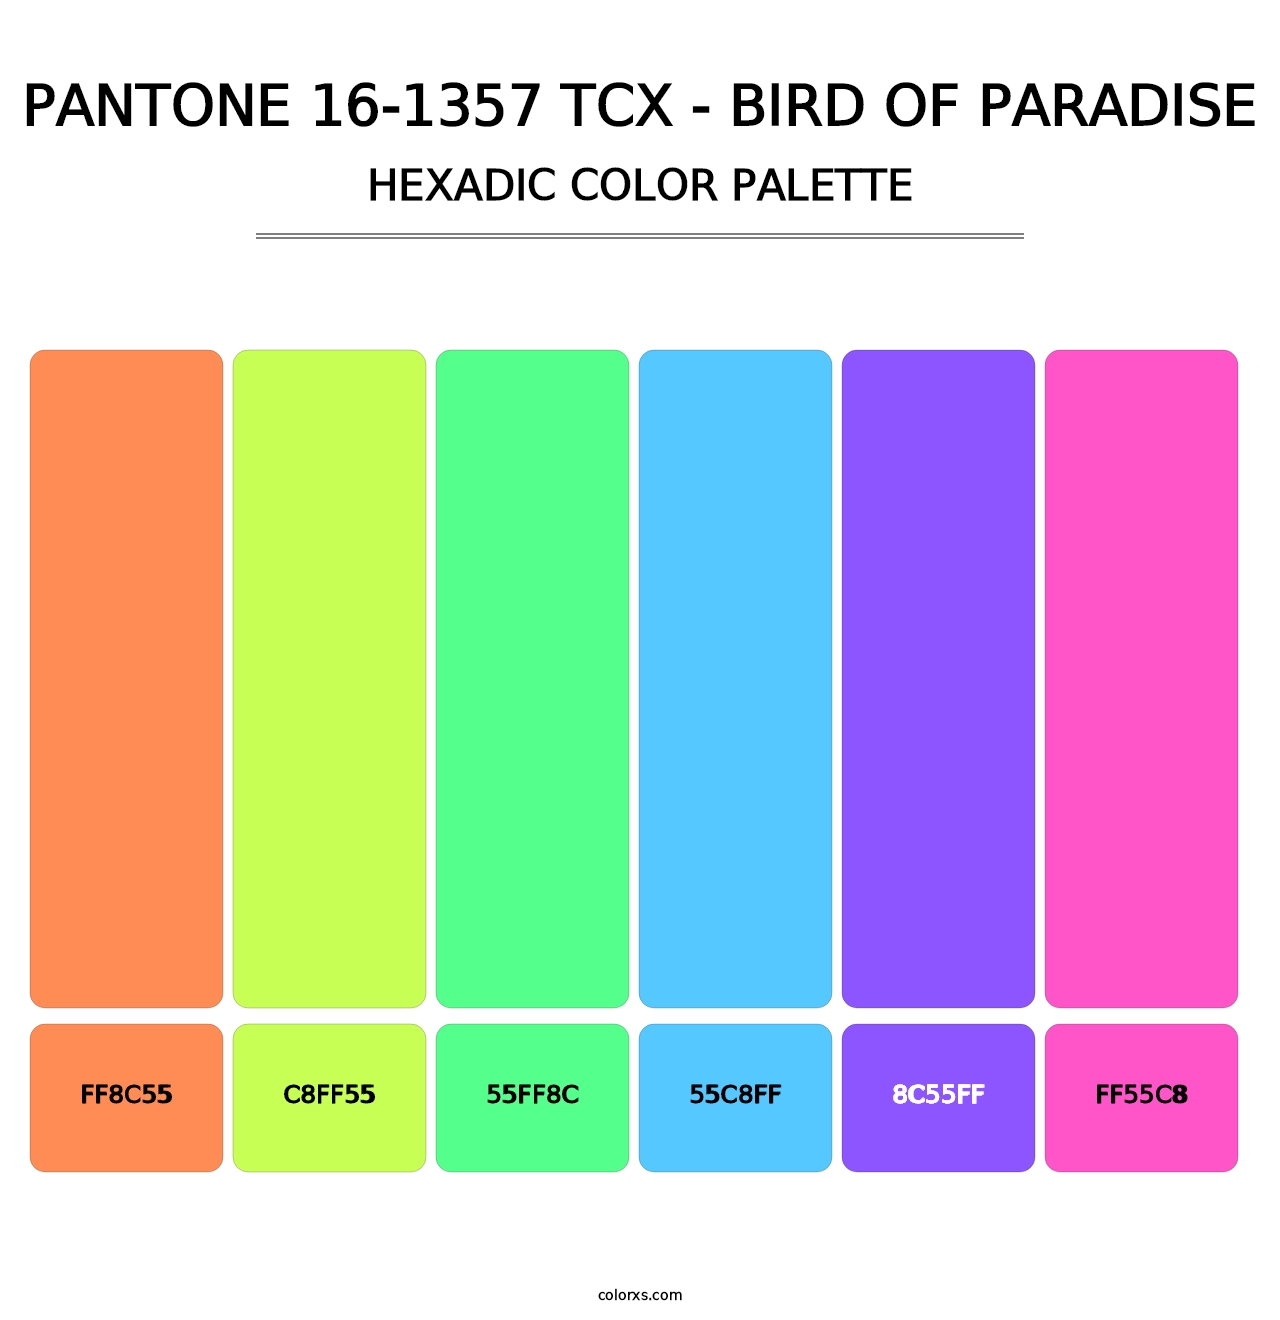 PANTONE 16-1357 TCX - Bird of Paradise - Hexadic Color Palette